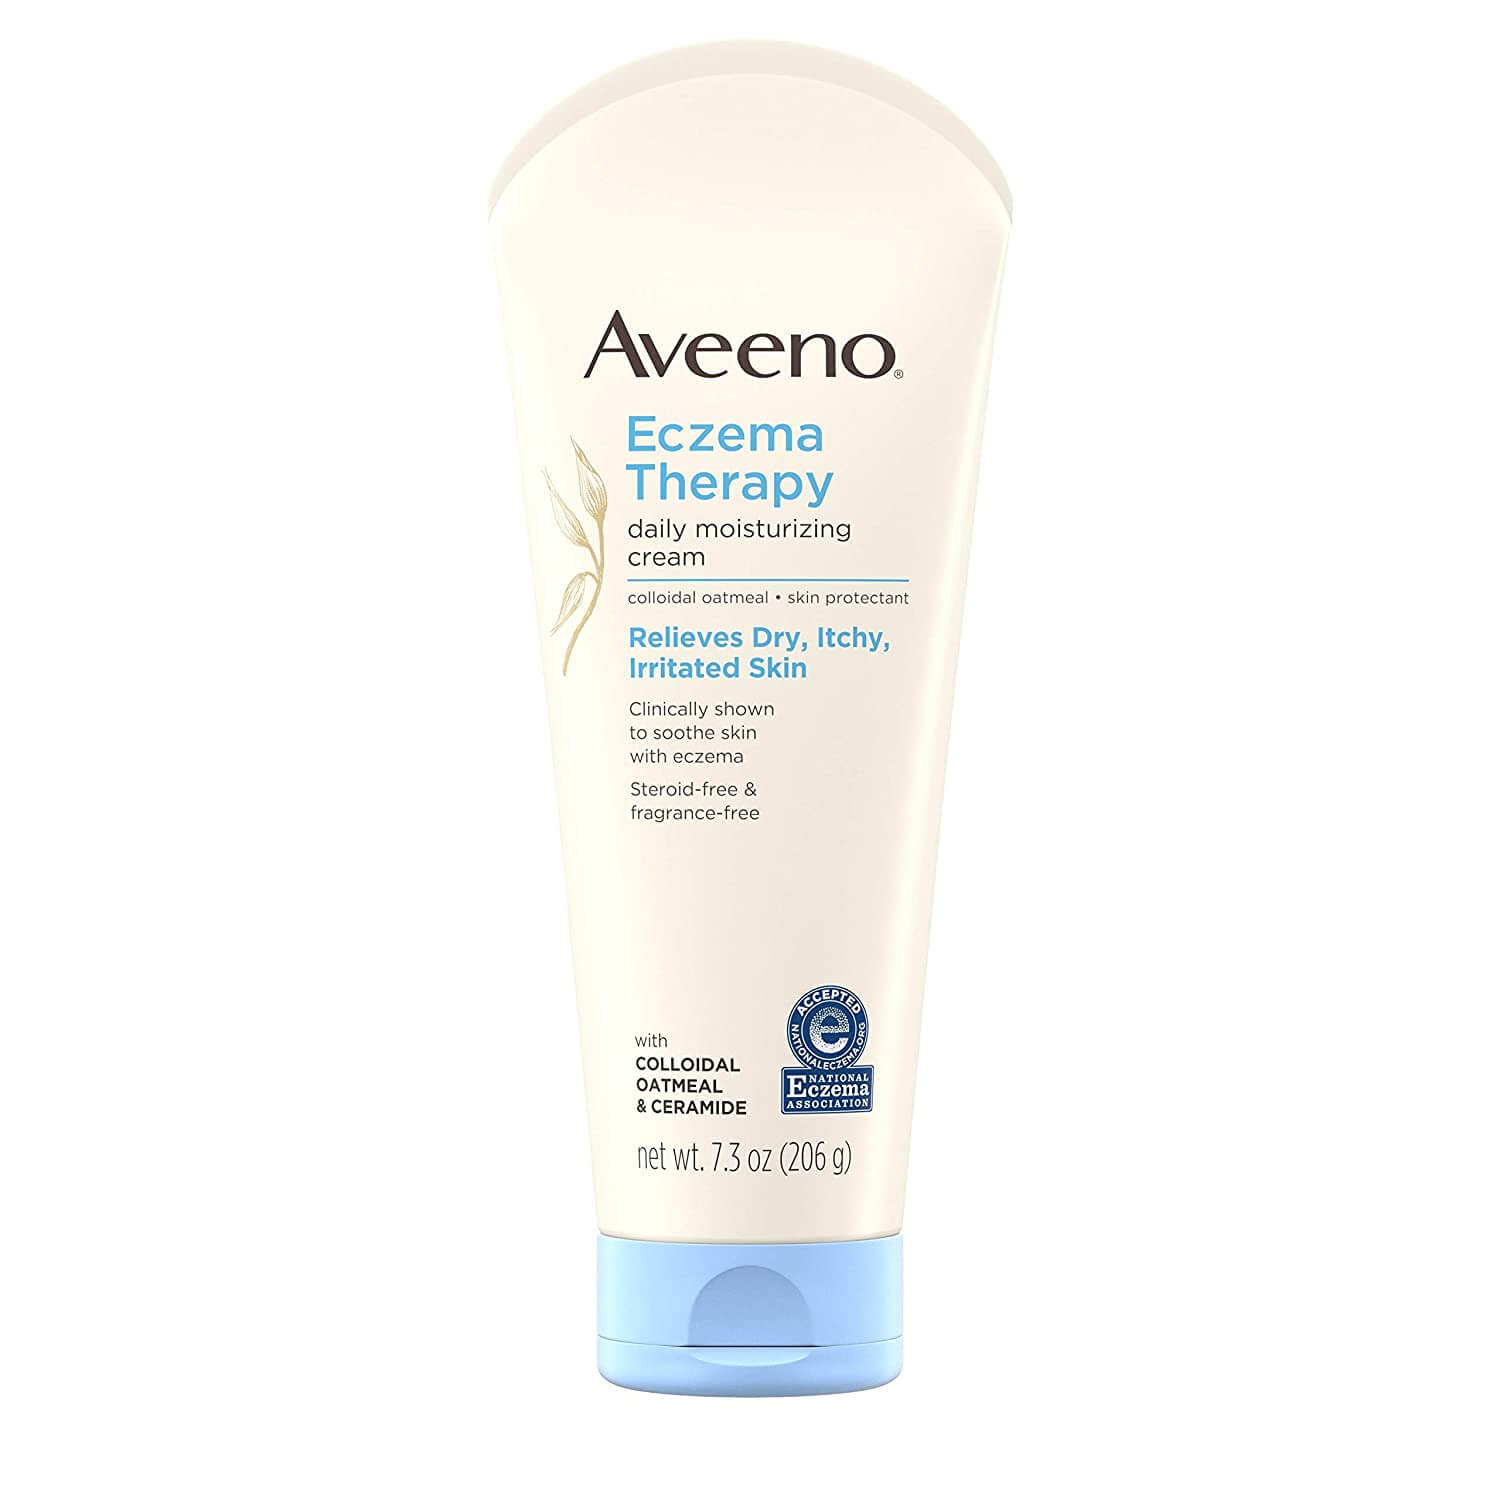 aveeno baby eczema therapy moisturizing cream